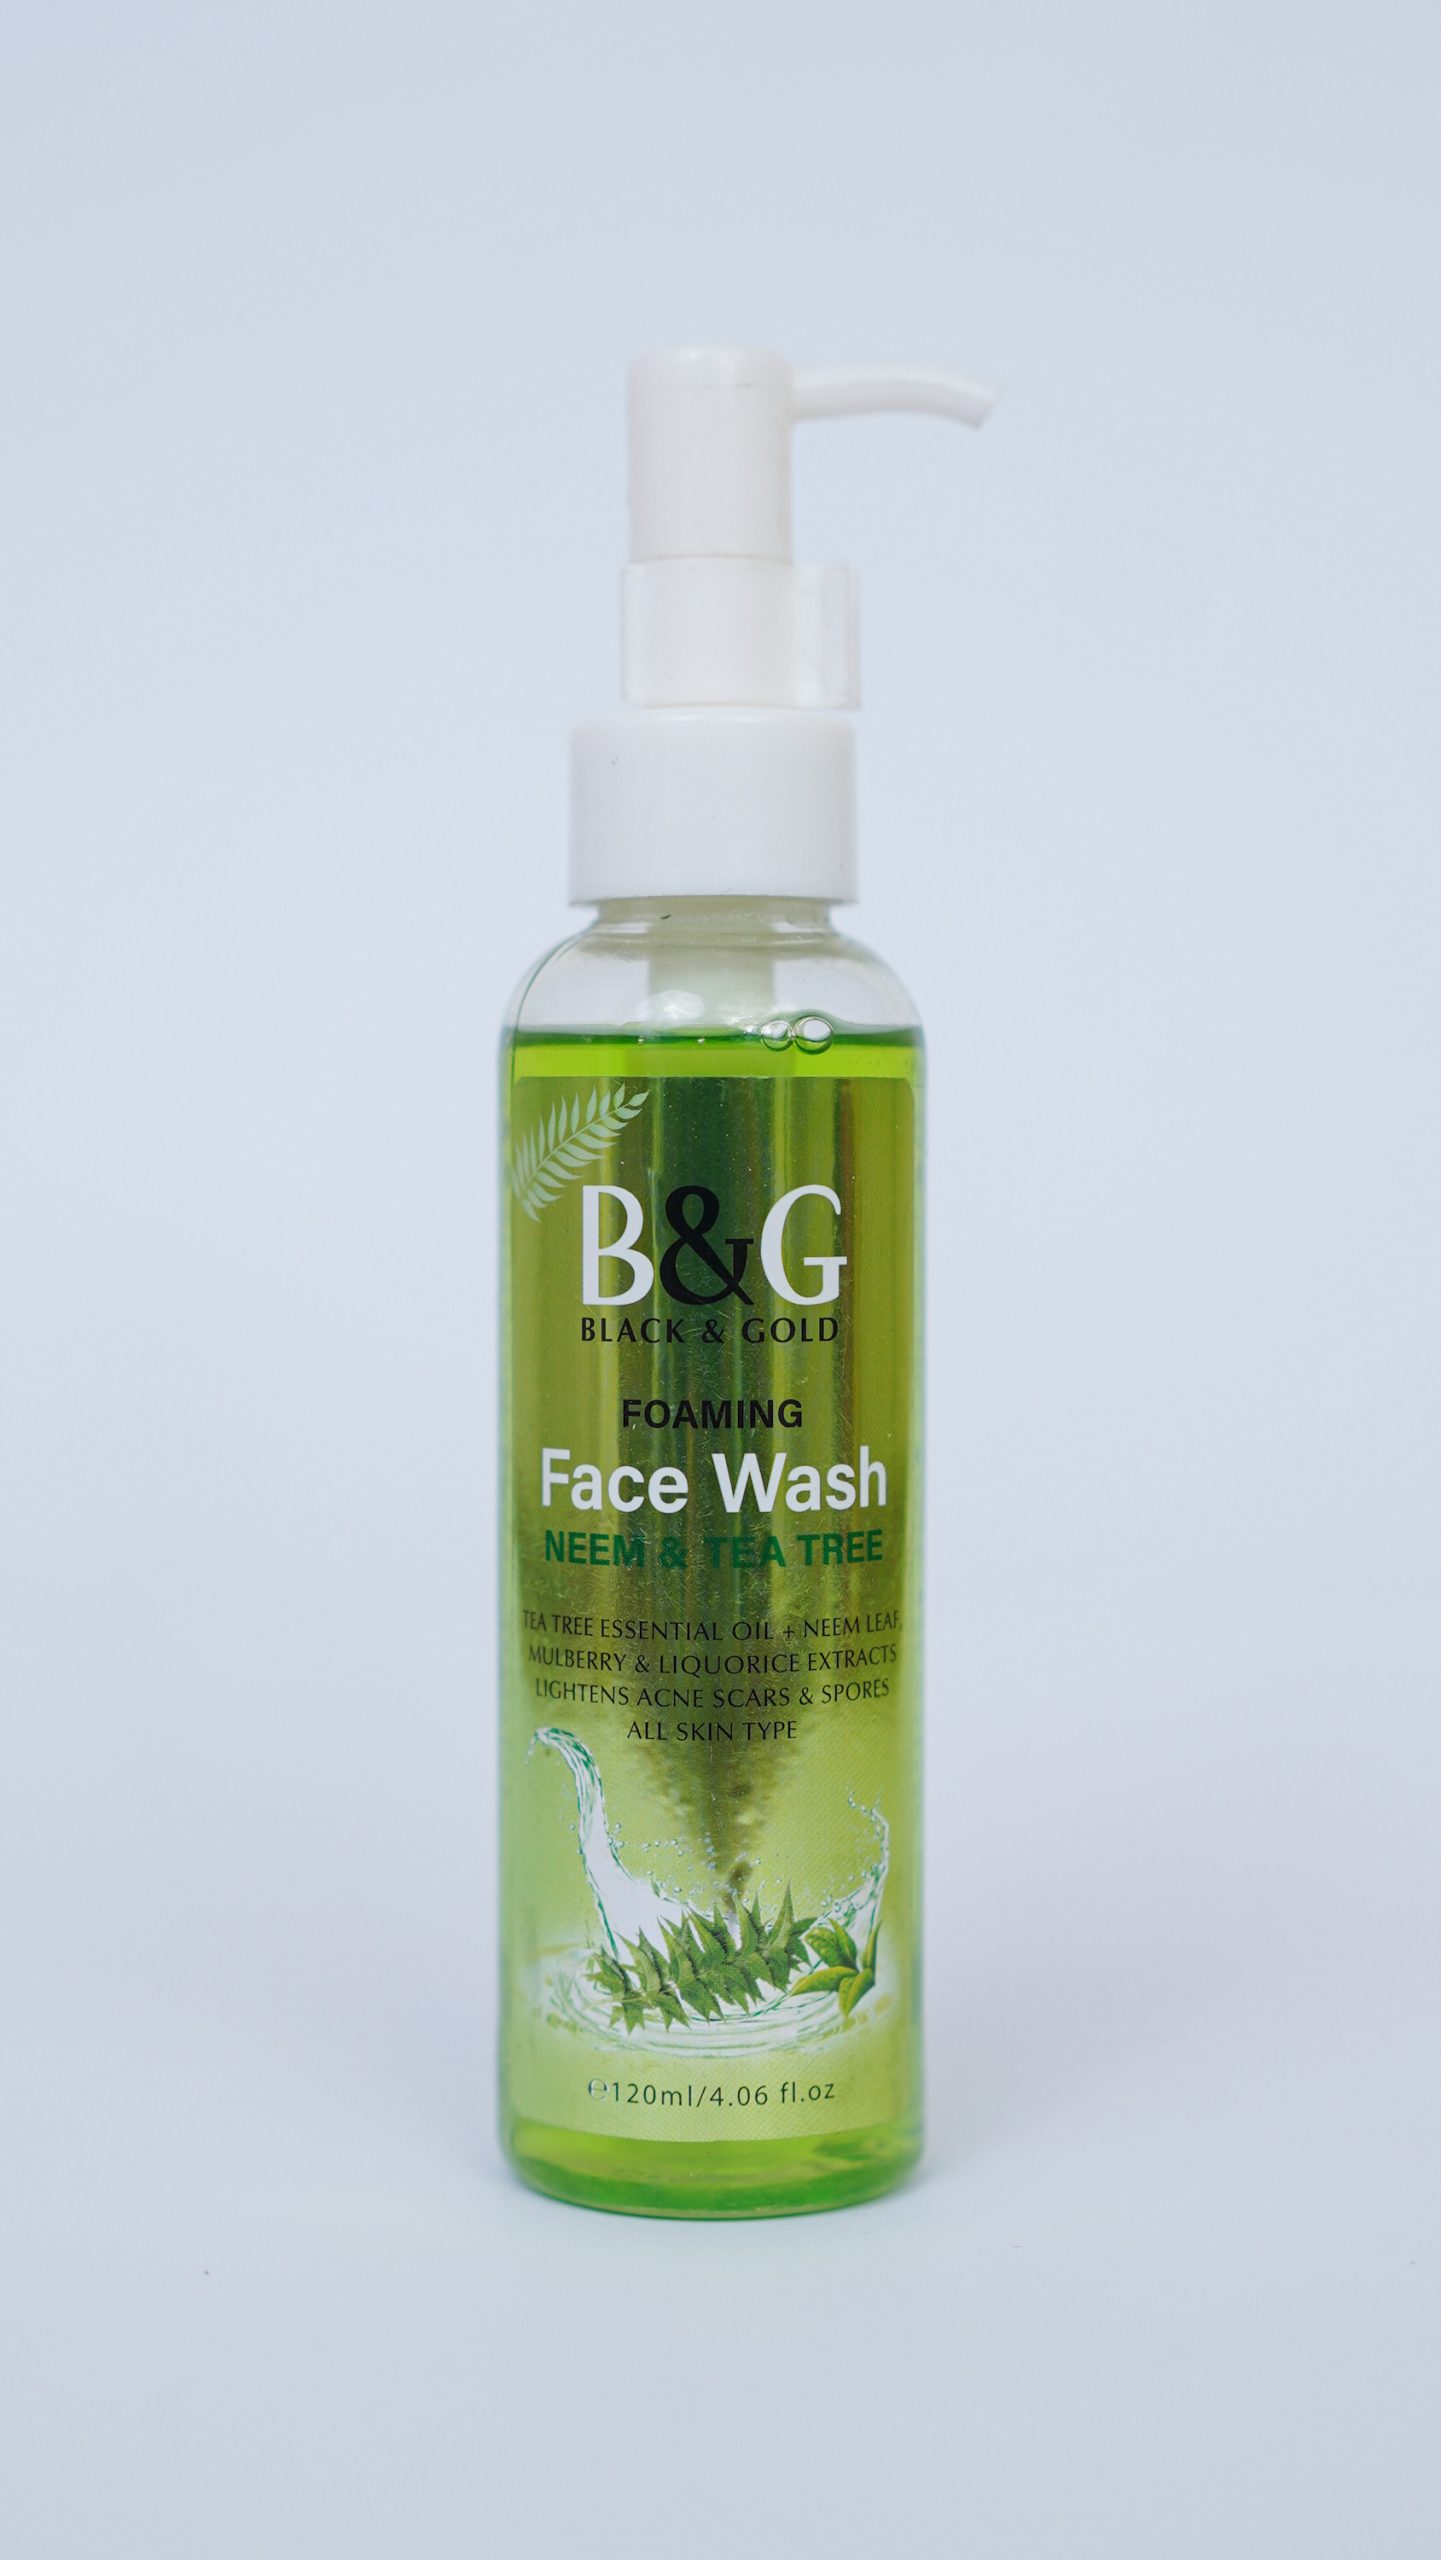 bg-neem-and-tea-tree-foaming-facewash